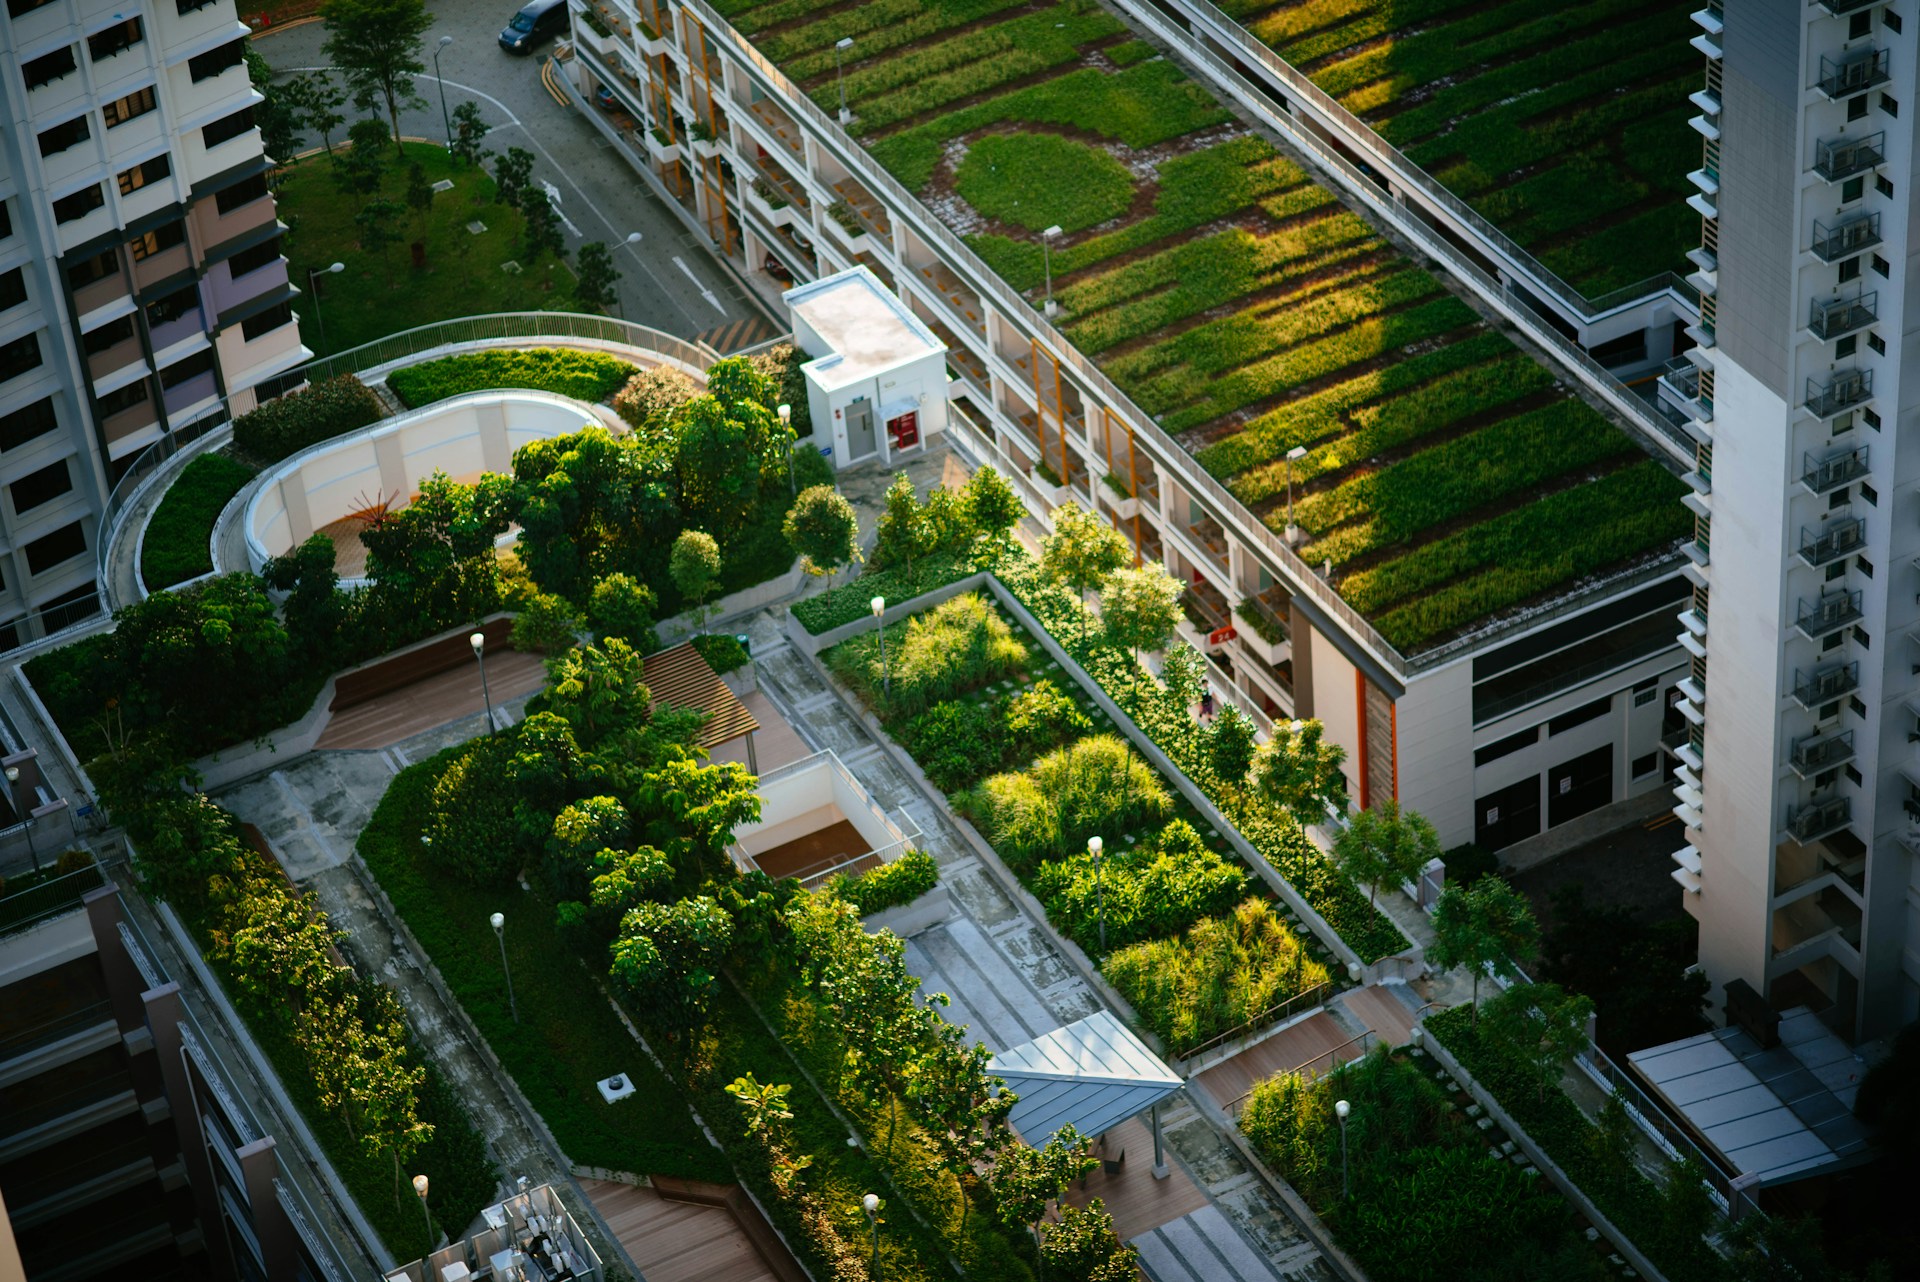 10 imaginative ideas that are greening the urban environment.